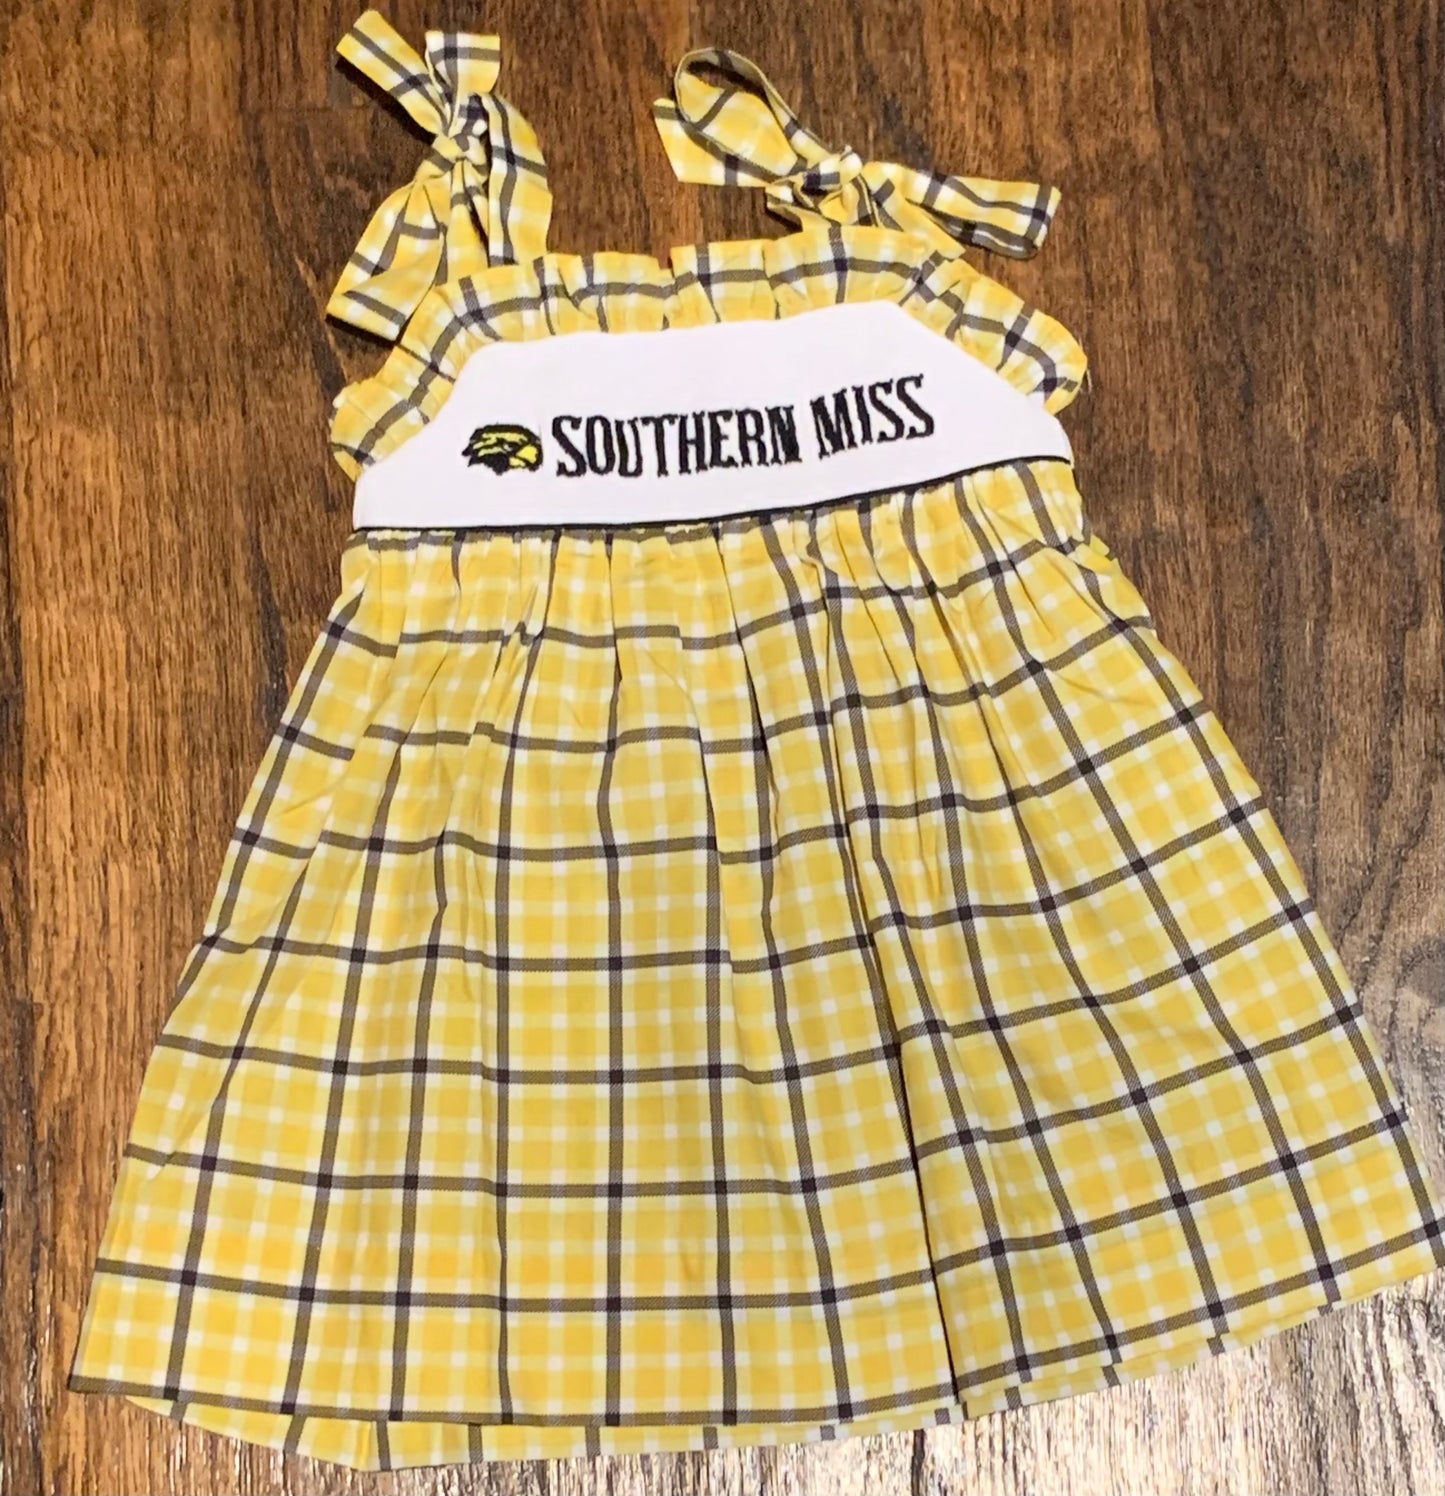 Southern Miss Dress